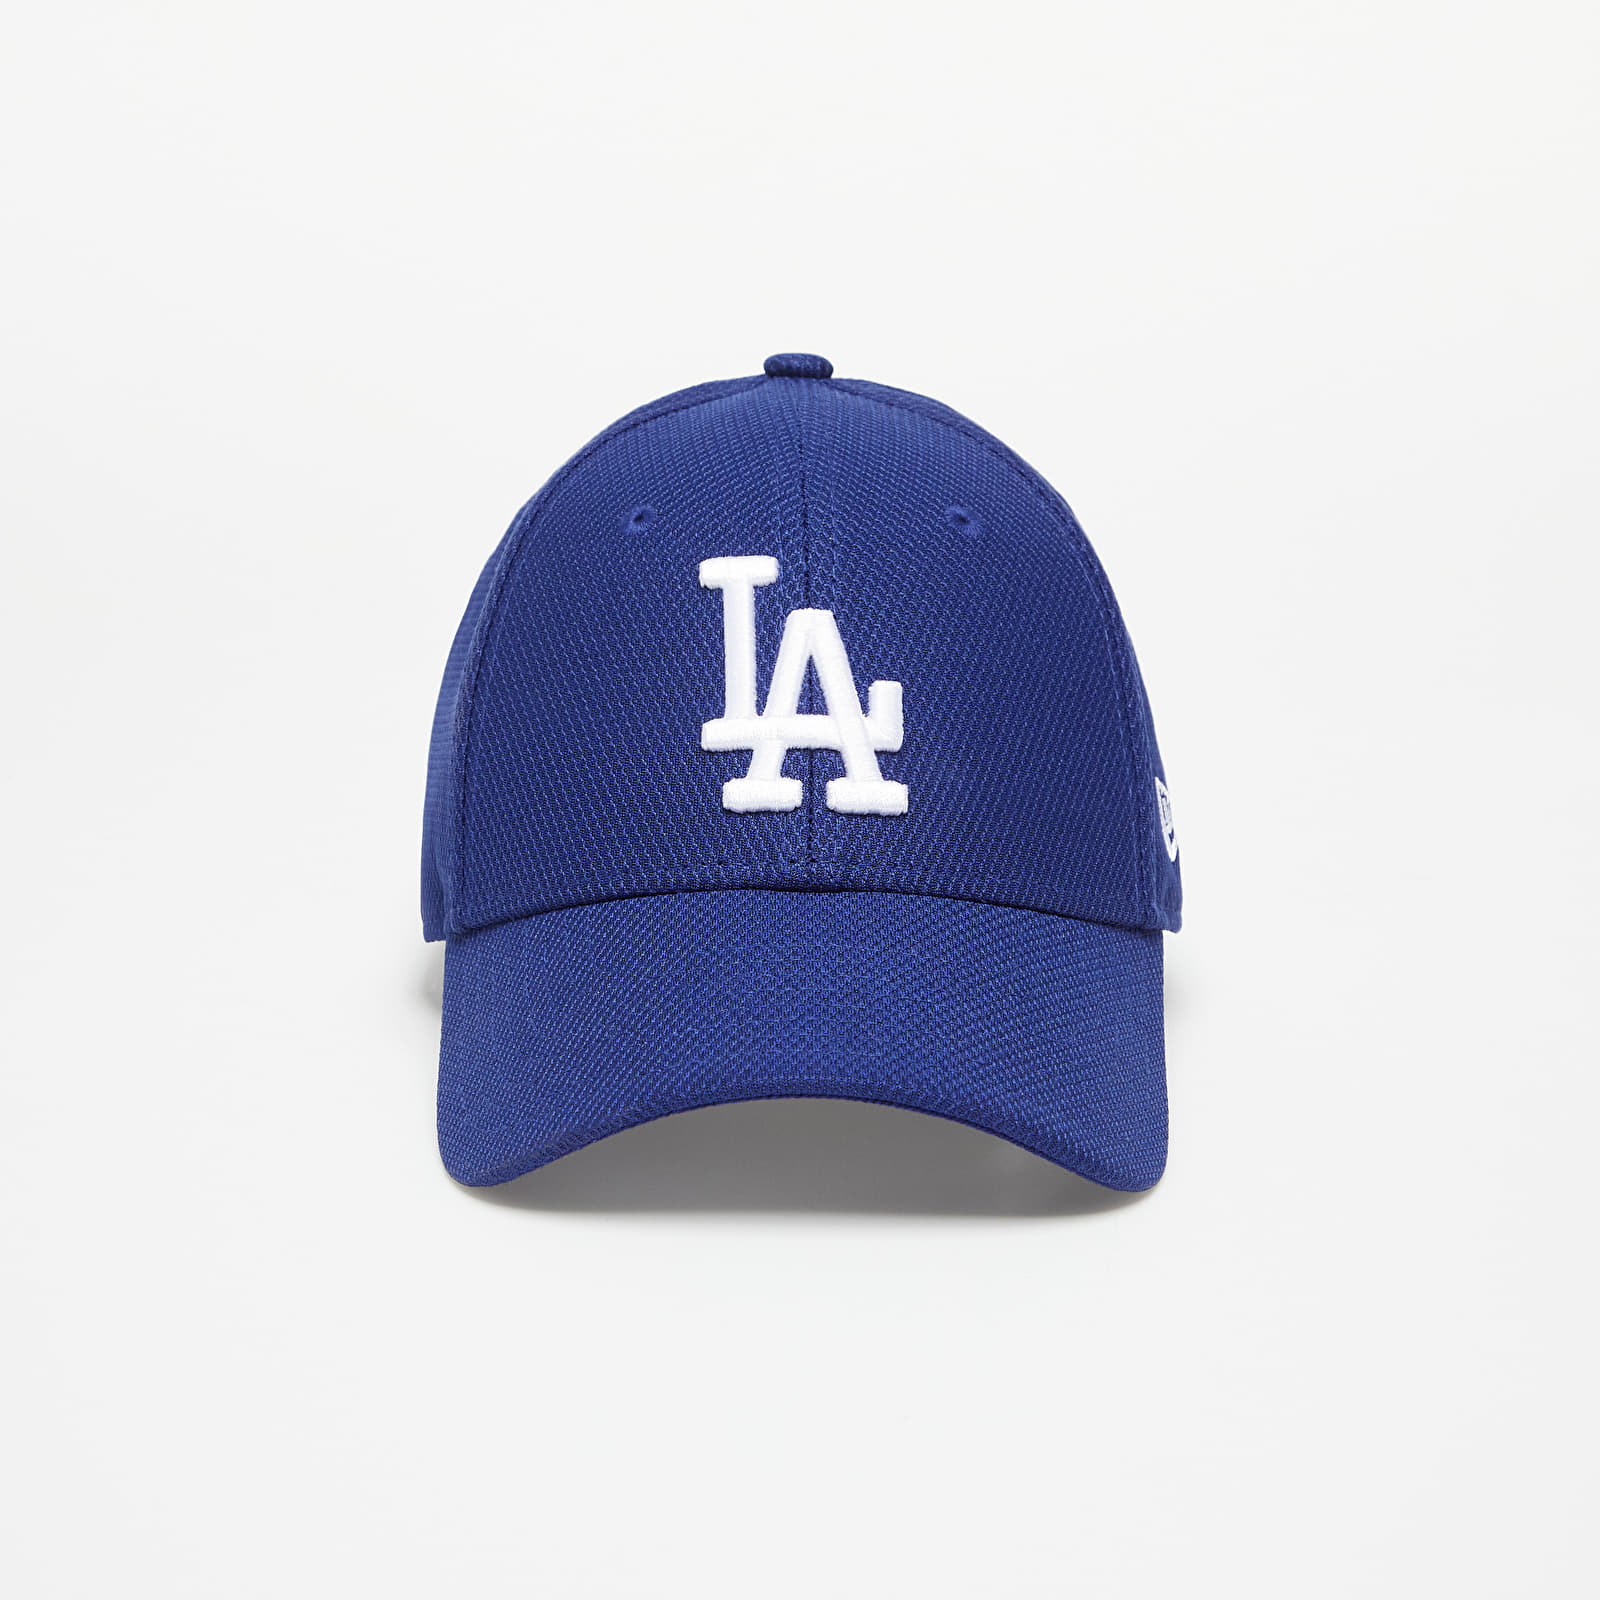 Caps New Era 940 Mlb Diamond Era Essential 9Forty Los Angeles Dodgers Dark Blue/ White